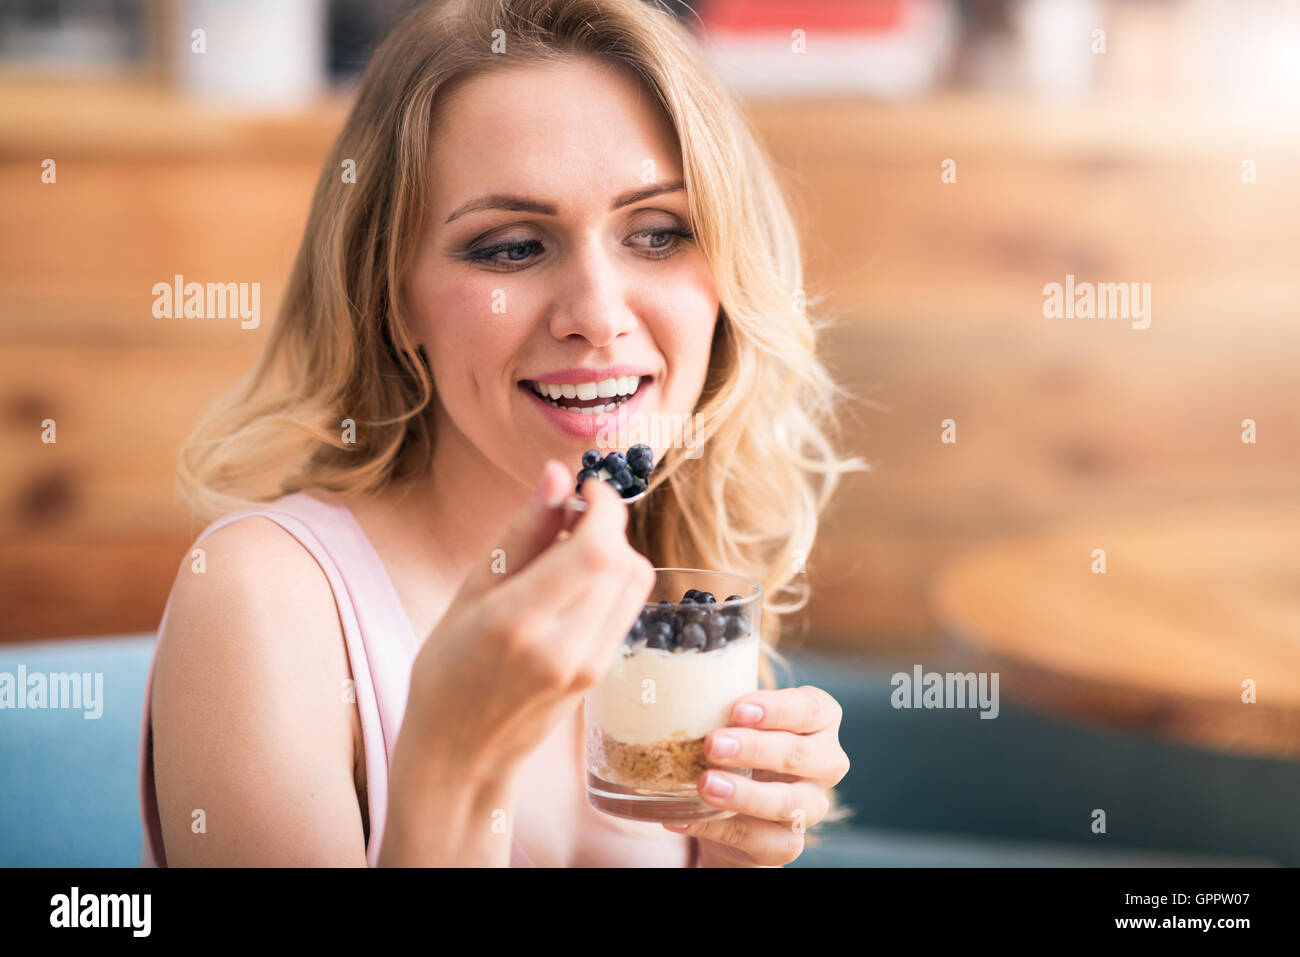 Nice young woman eating desert Stock Photo